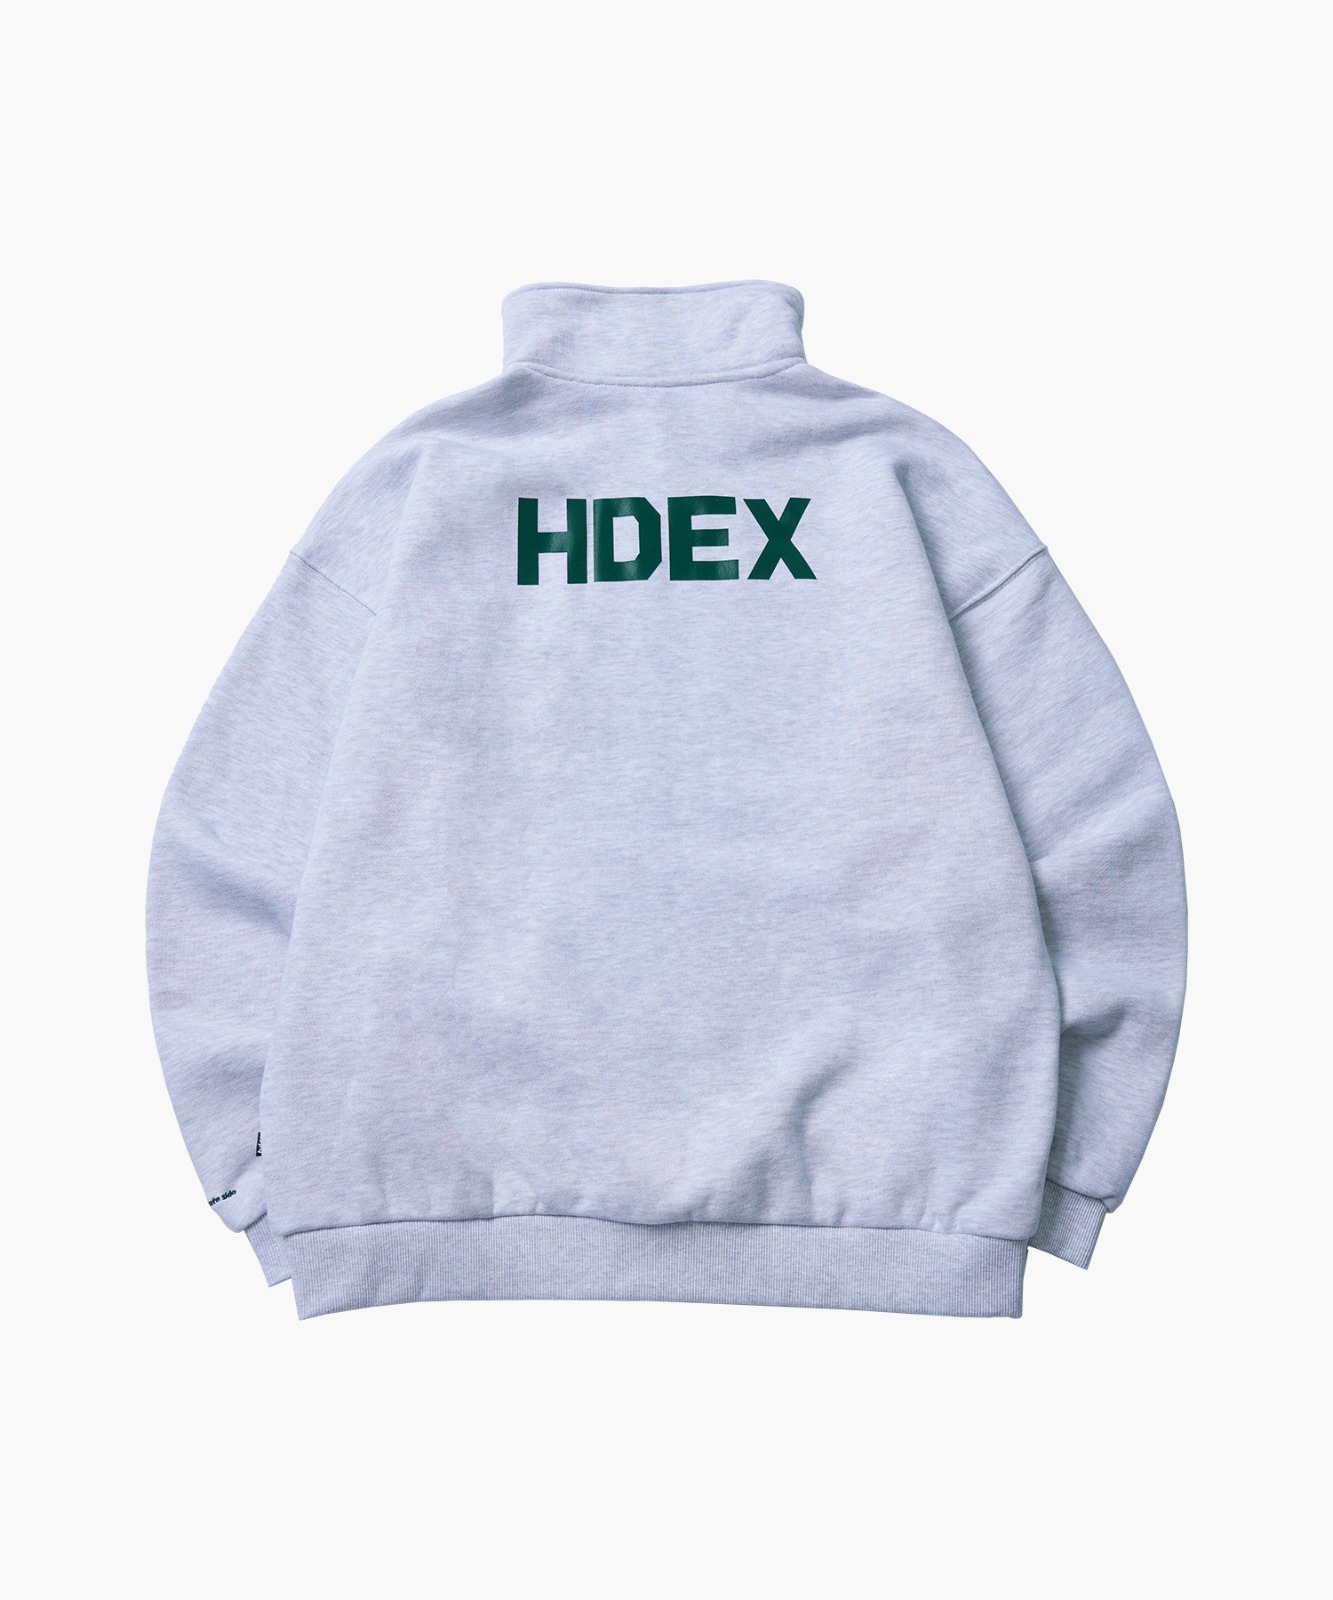 HDEX, 메인 백로고 하프집업 스웨트셔츠 2 color